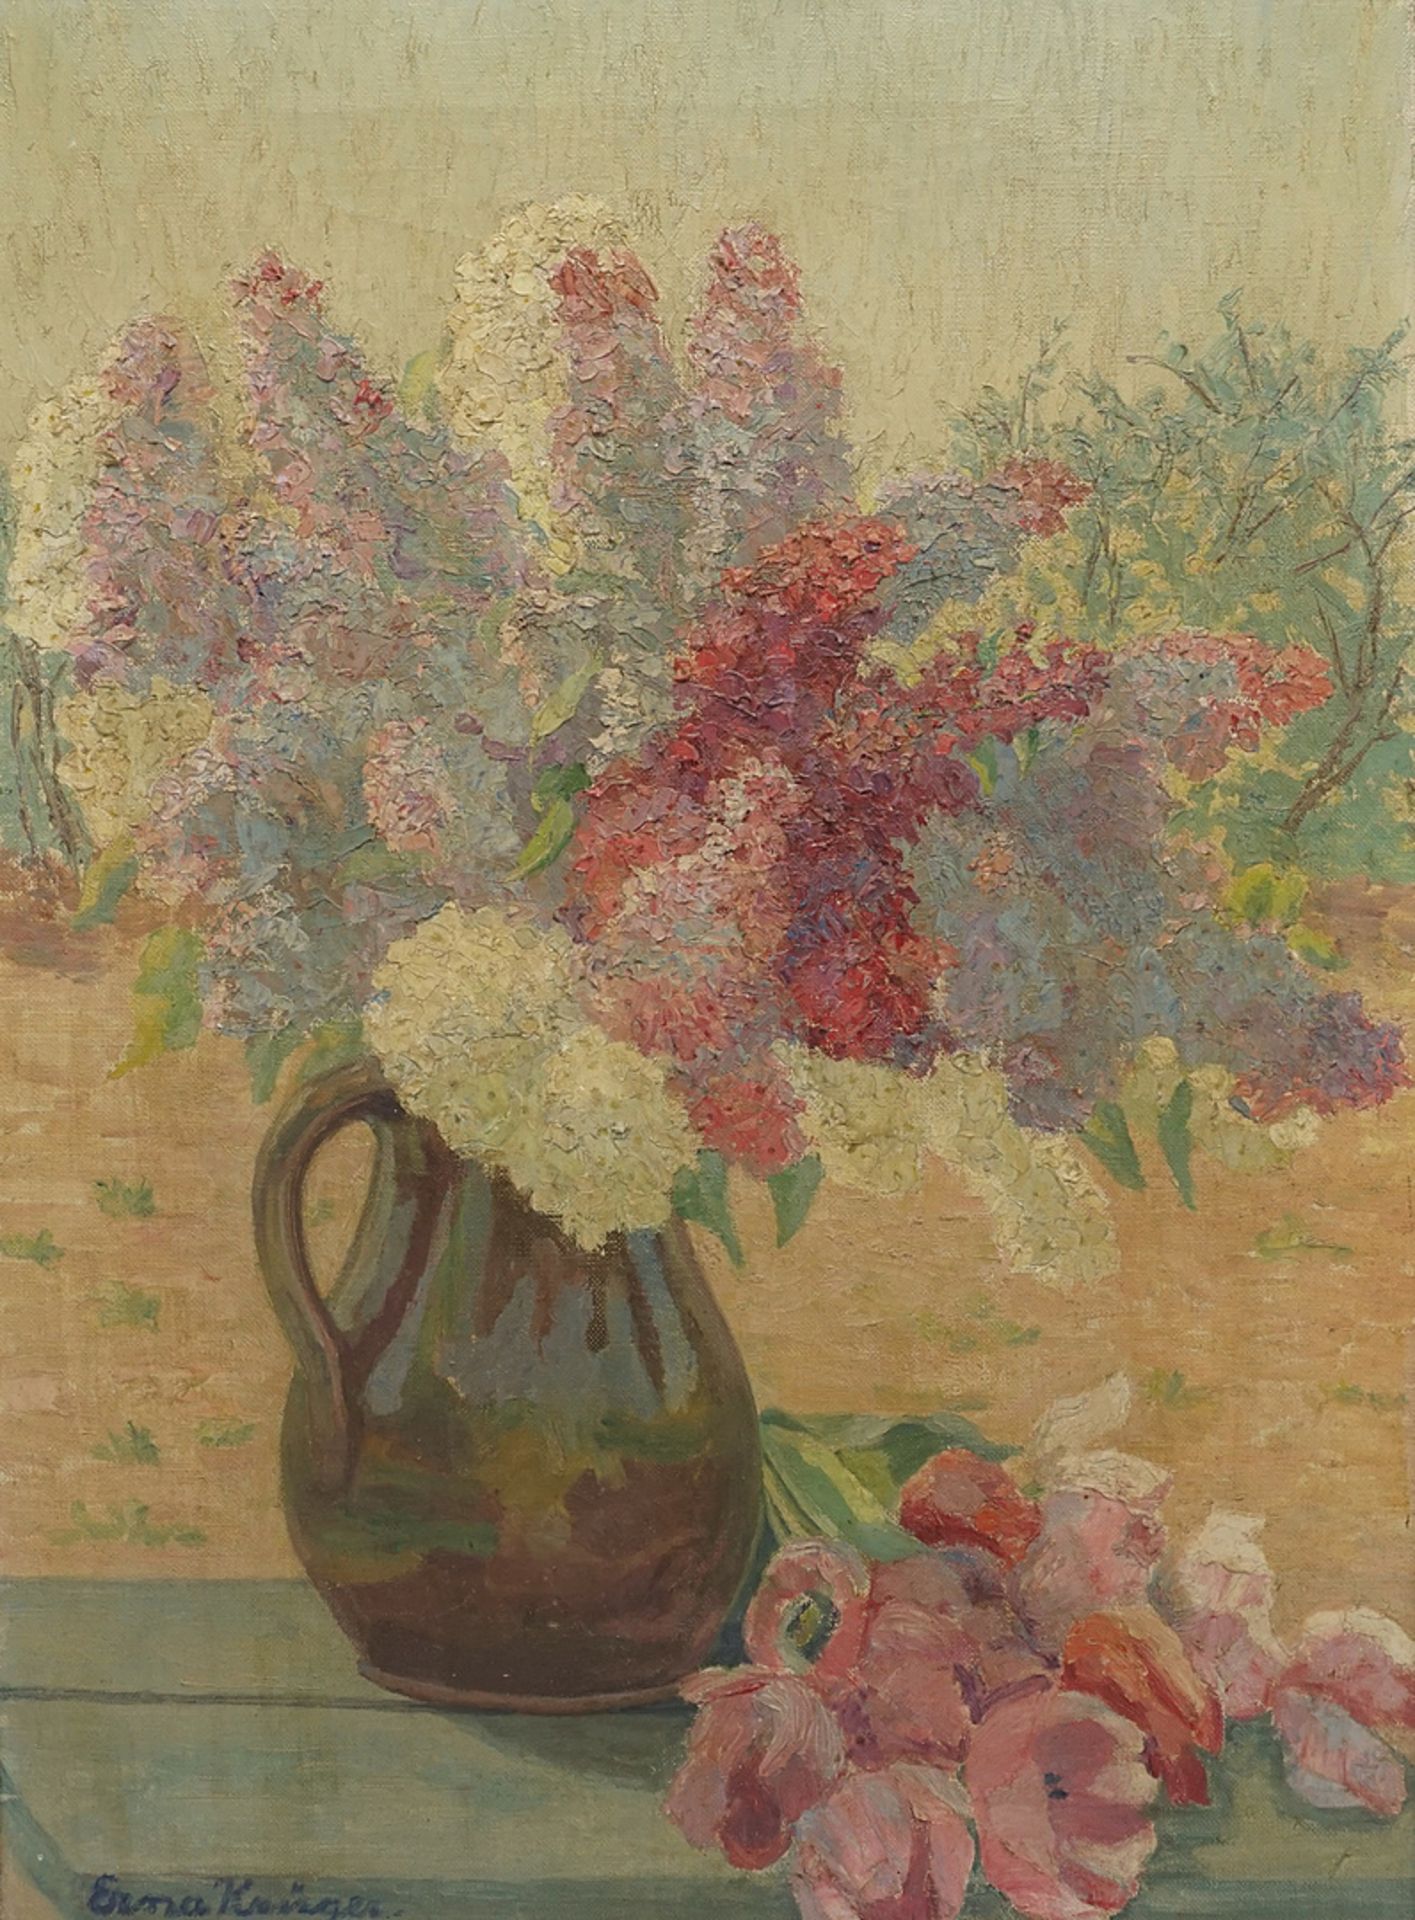 Erna Krüger (1883-1973), Flower still life